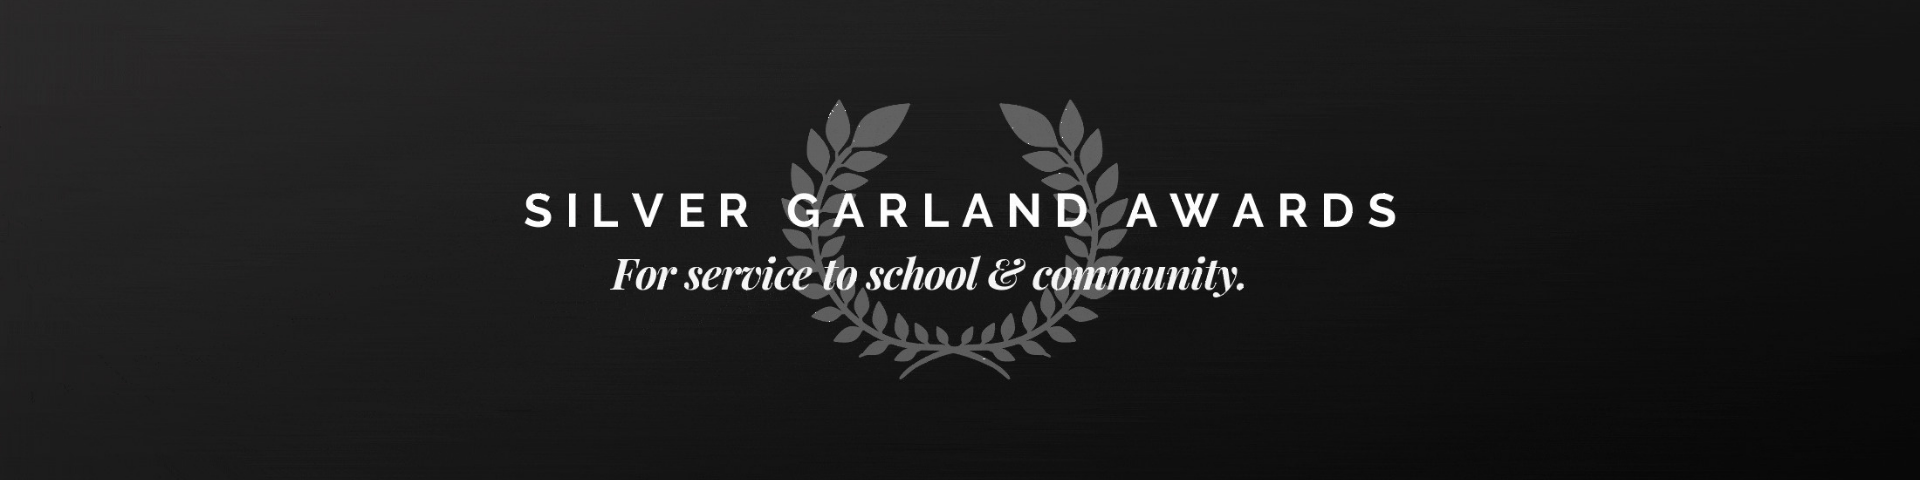 Silver Garlands Logo and Header